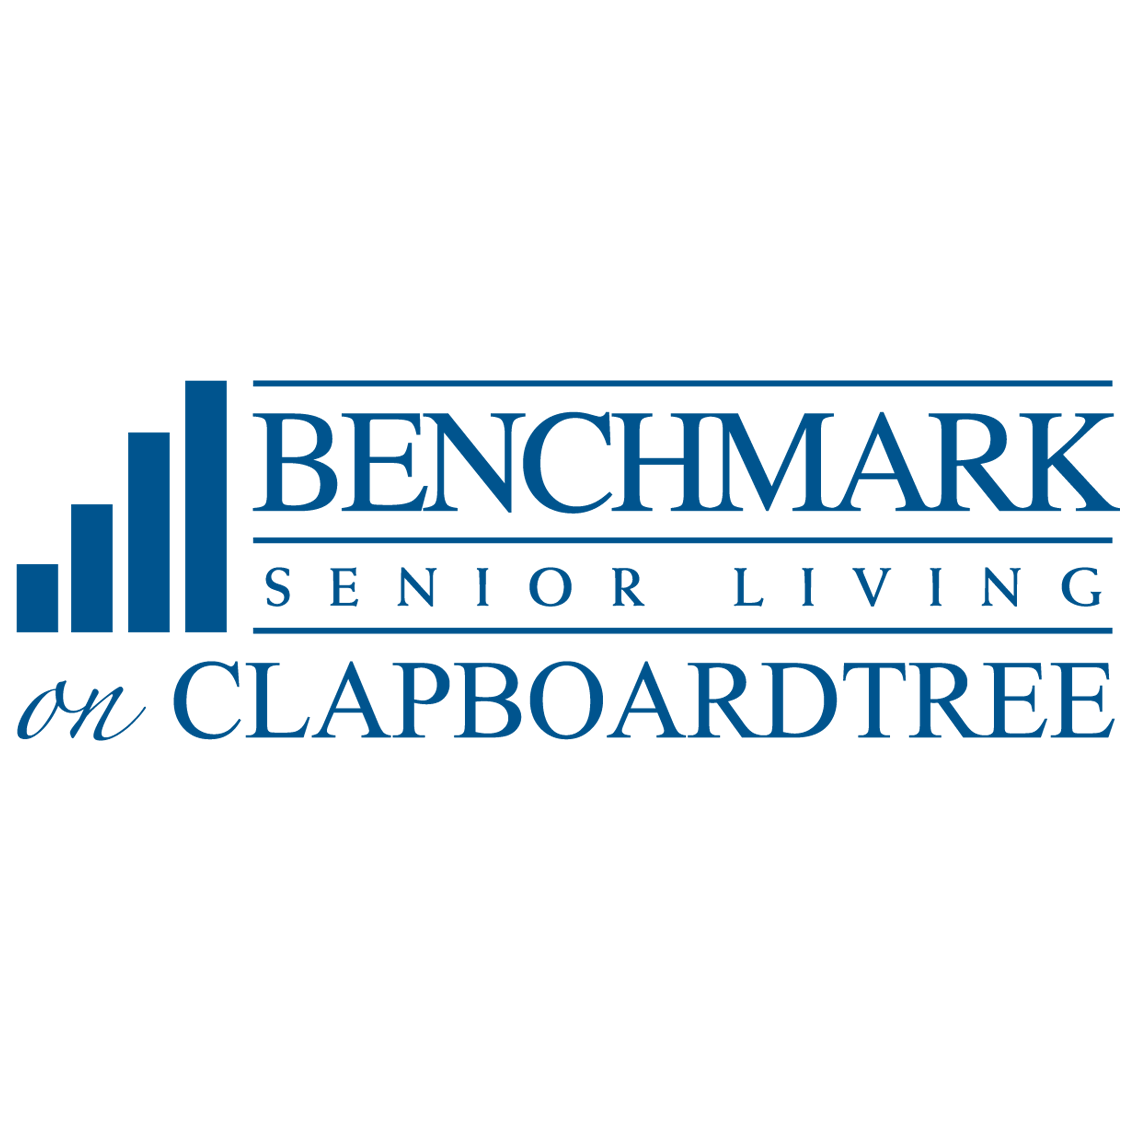 Benchmark Senior Living on Clapboardtree Photo